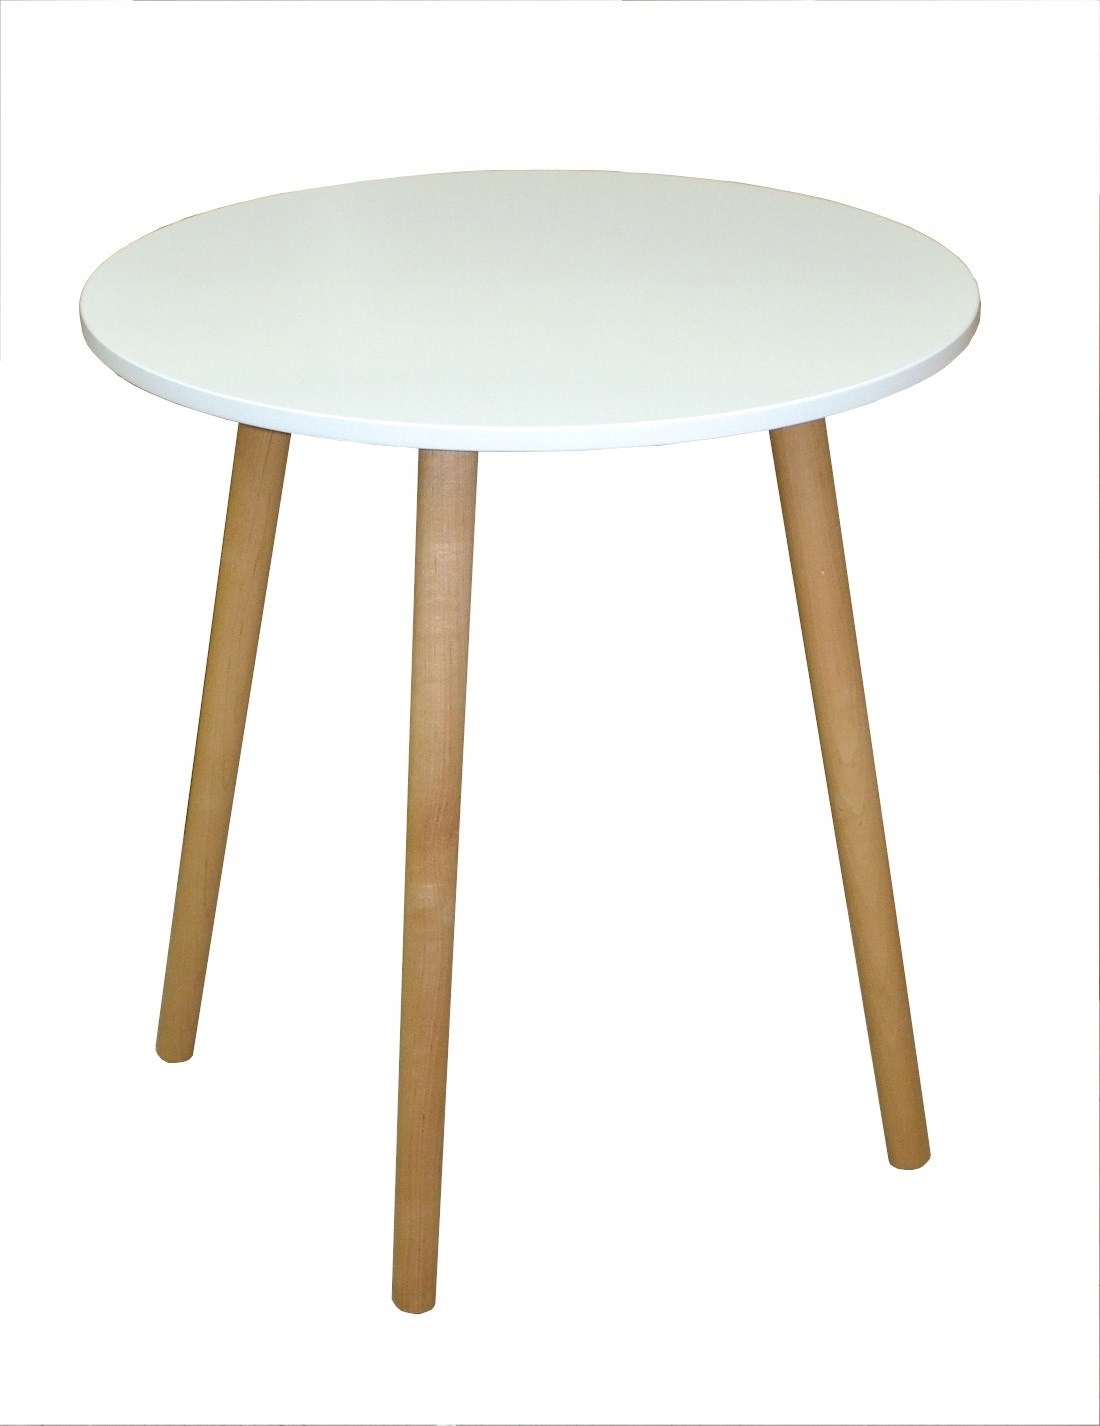 Столик 60 70. Круглый стол 80см 80 см. Круглый стол 60 см Borneo. Столик круглый. Ножка для круглого стола.